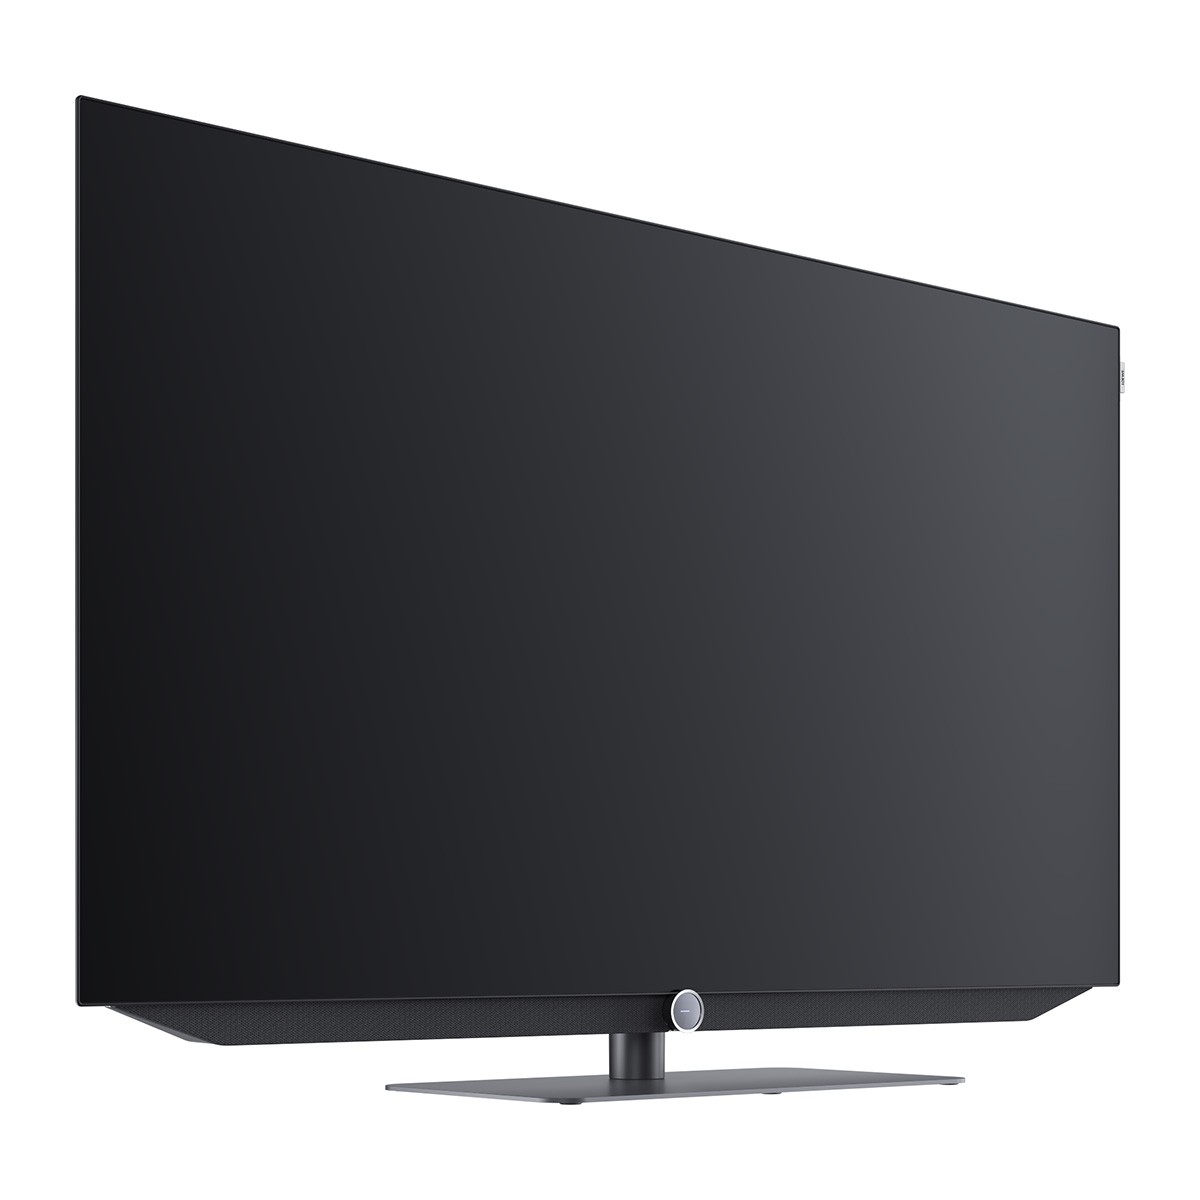 Televizorius OLED 4K 55" TV bild v.55 dr+ Outlet